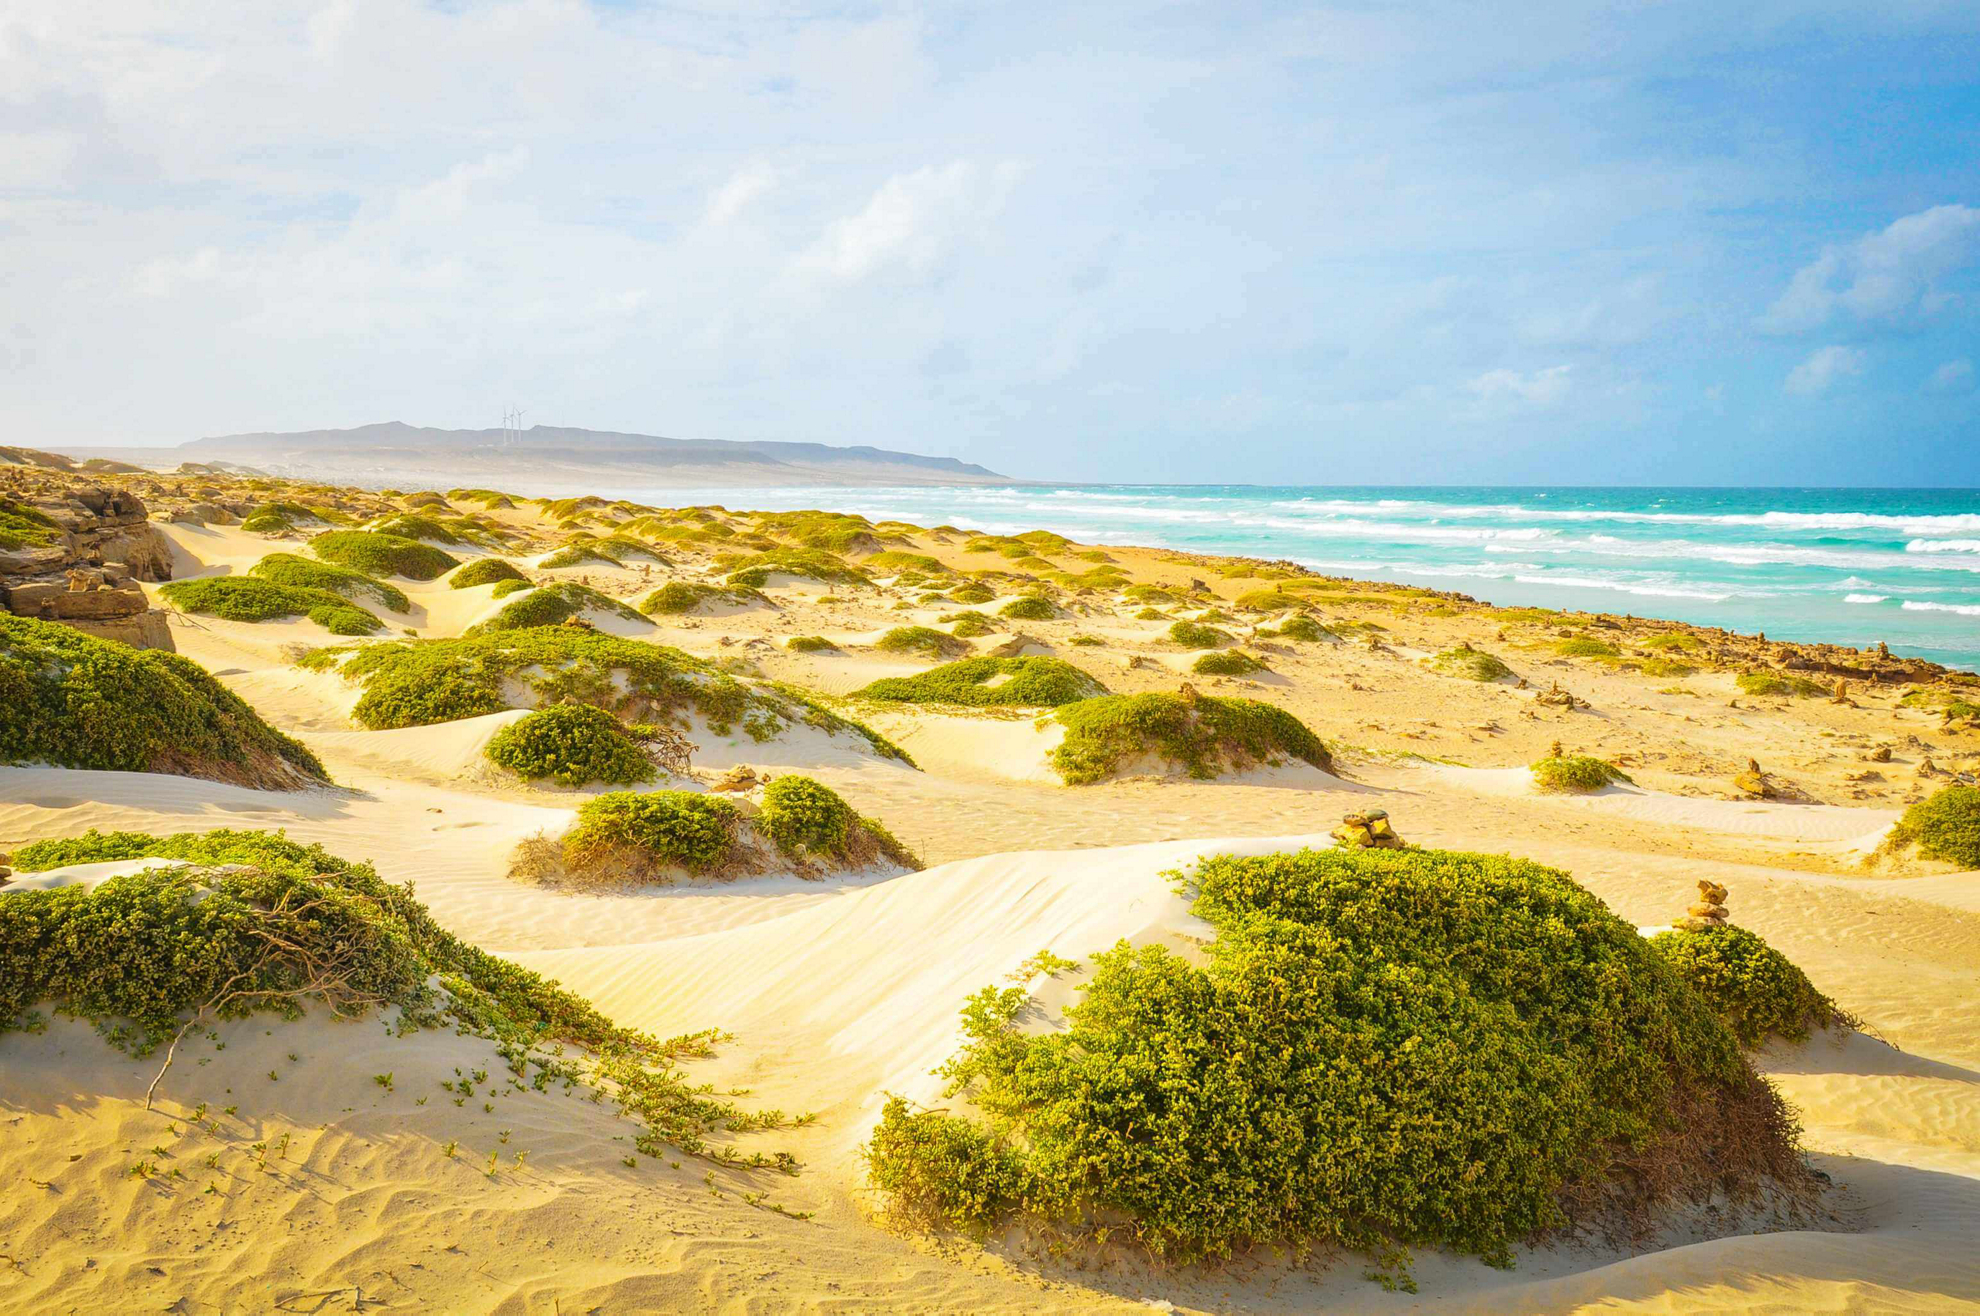 Boa Vista beaches: a windswept white sand beach with green foliage